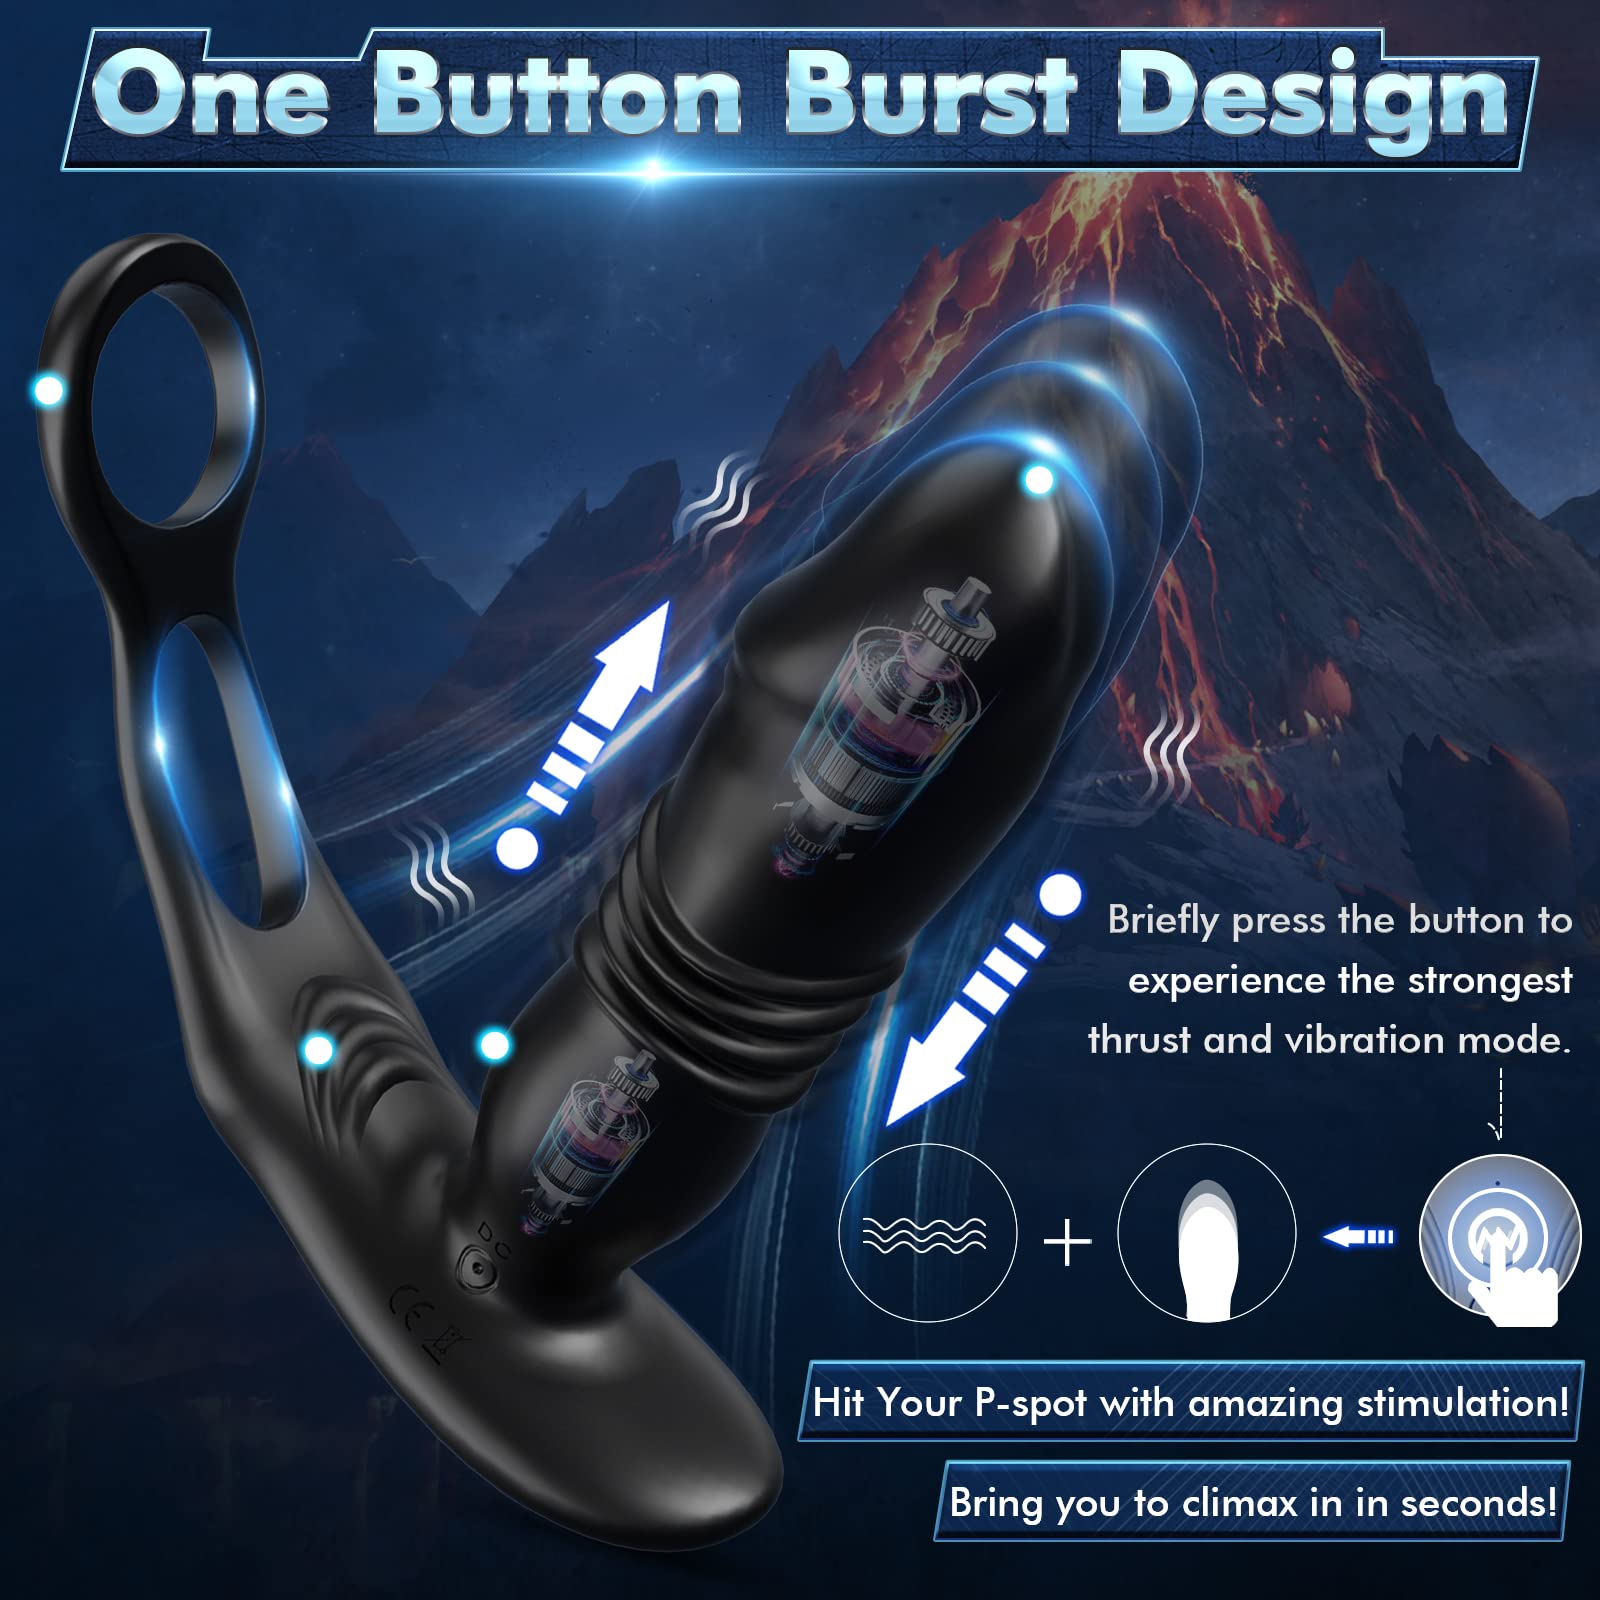 Dual Penis Ring Remote Control 3 Thrusting 12 Vibrating Butt Plug